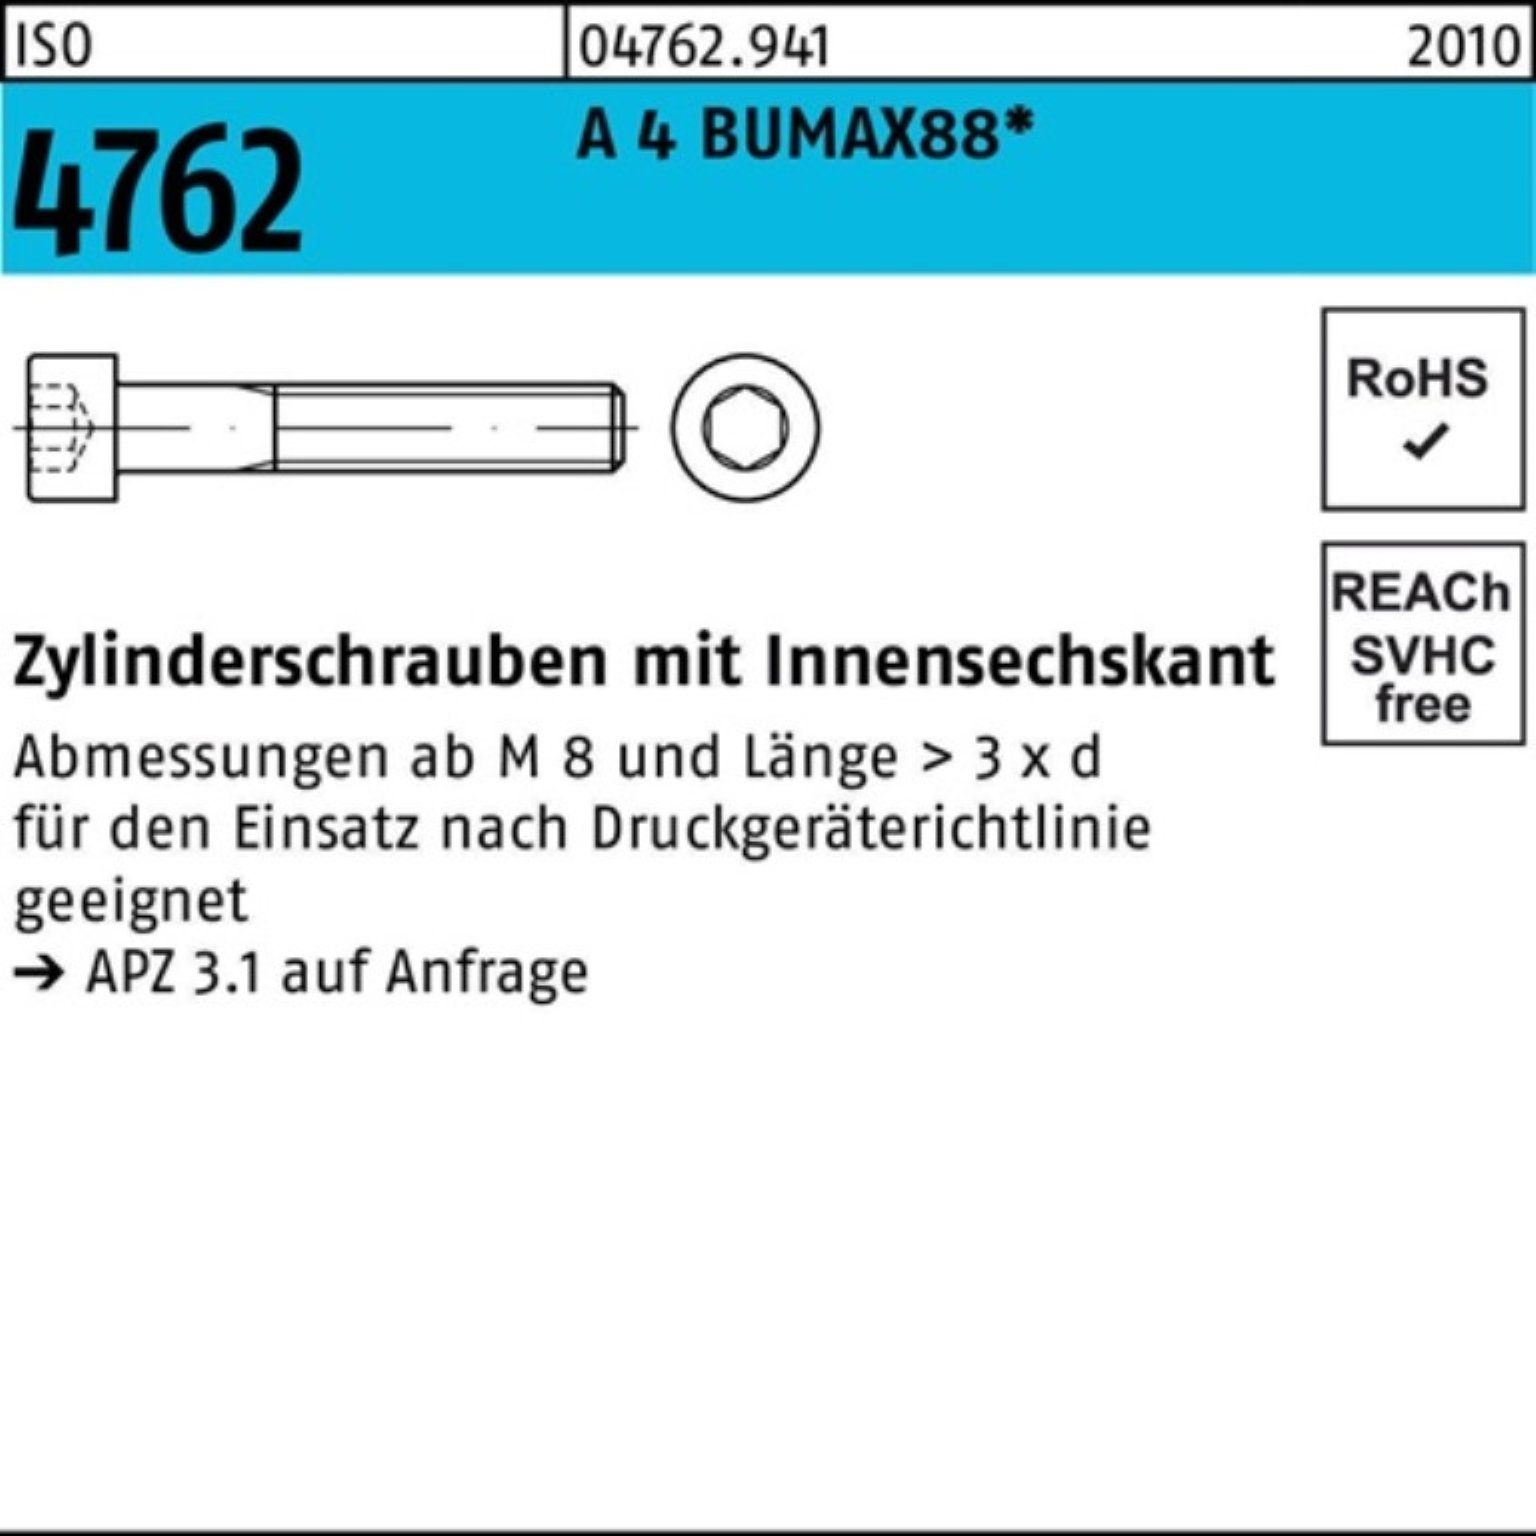 25 Pack A Bufab 30 BUMAX88 M12x Innen-6kt ISO 4762 100er Zylinderschraube 4 Zylinderschraube